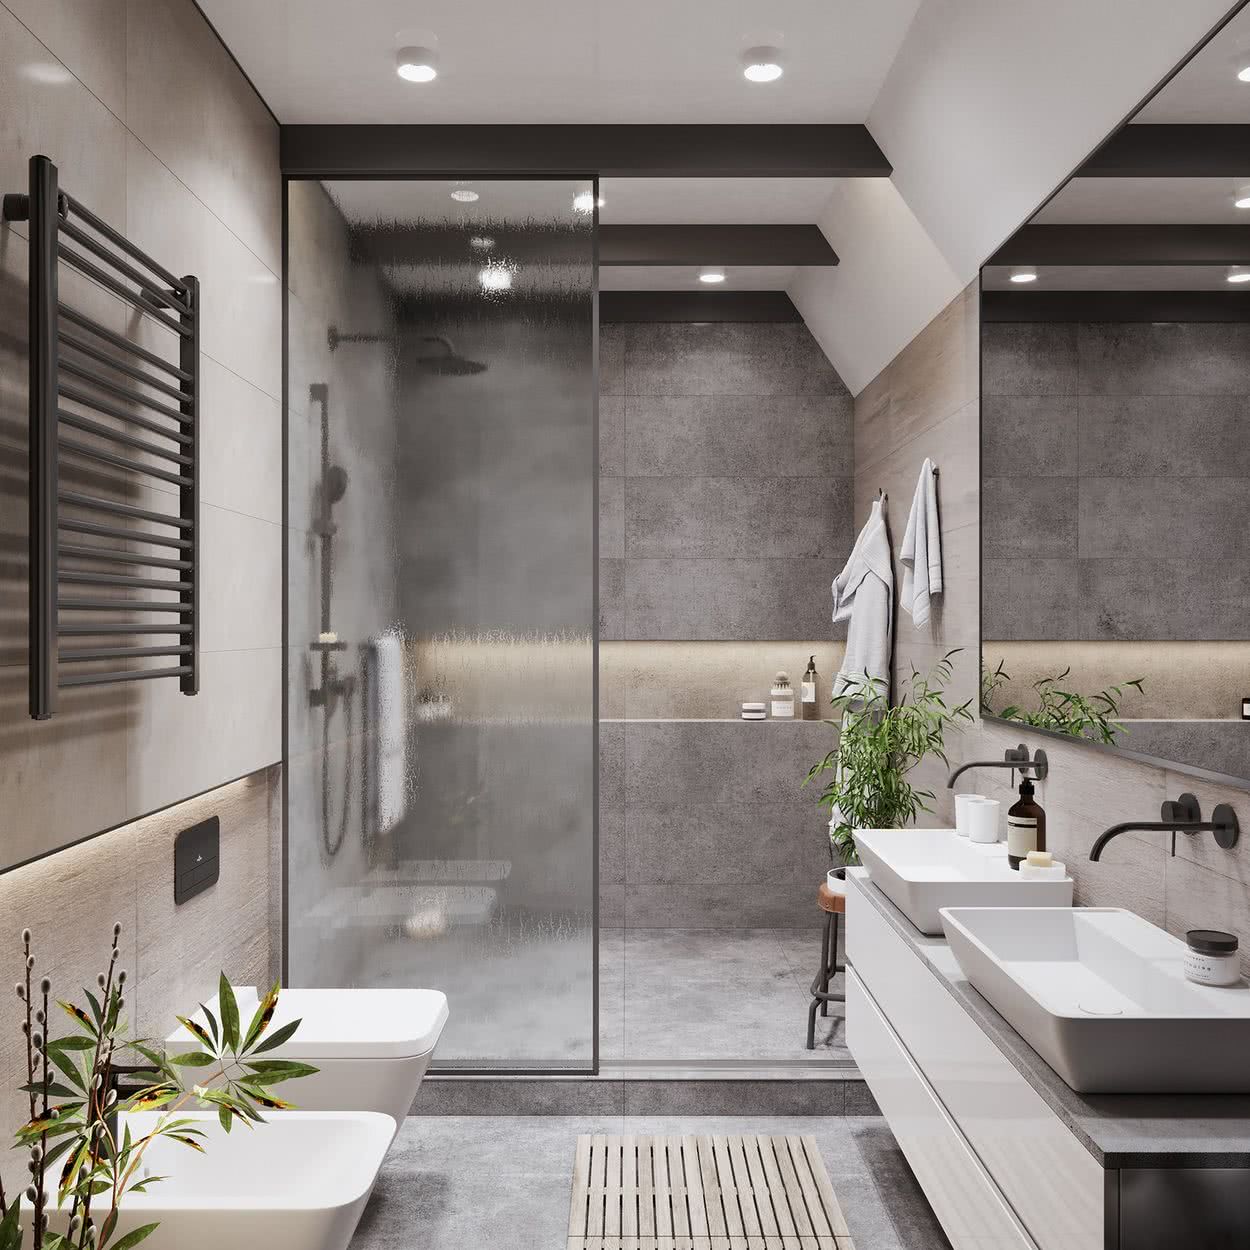 Modern Bathroom Design Ideas 2020 - BEST HOME DESIGN IDEAS